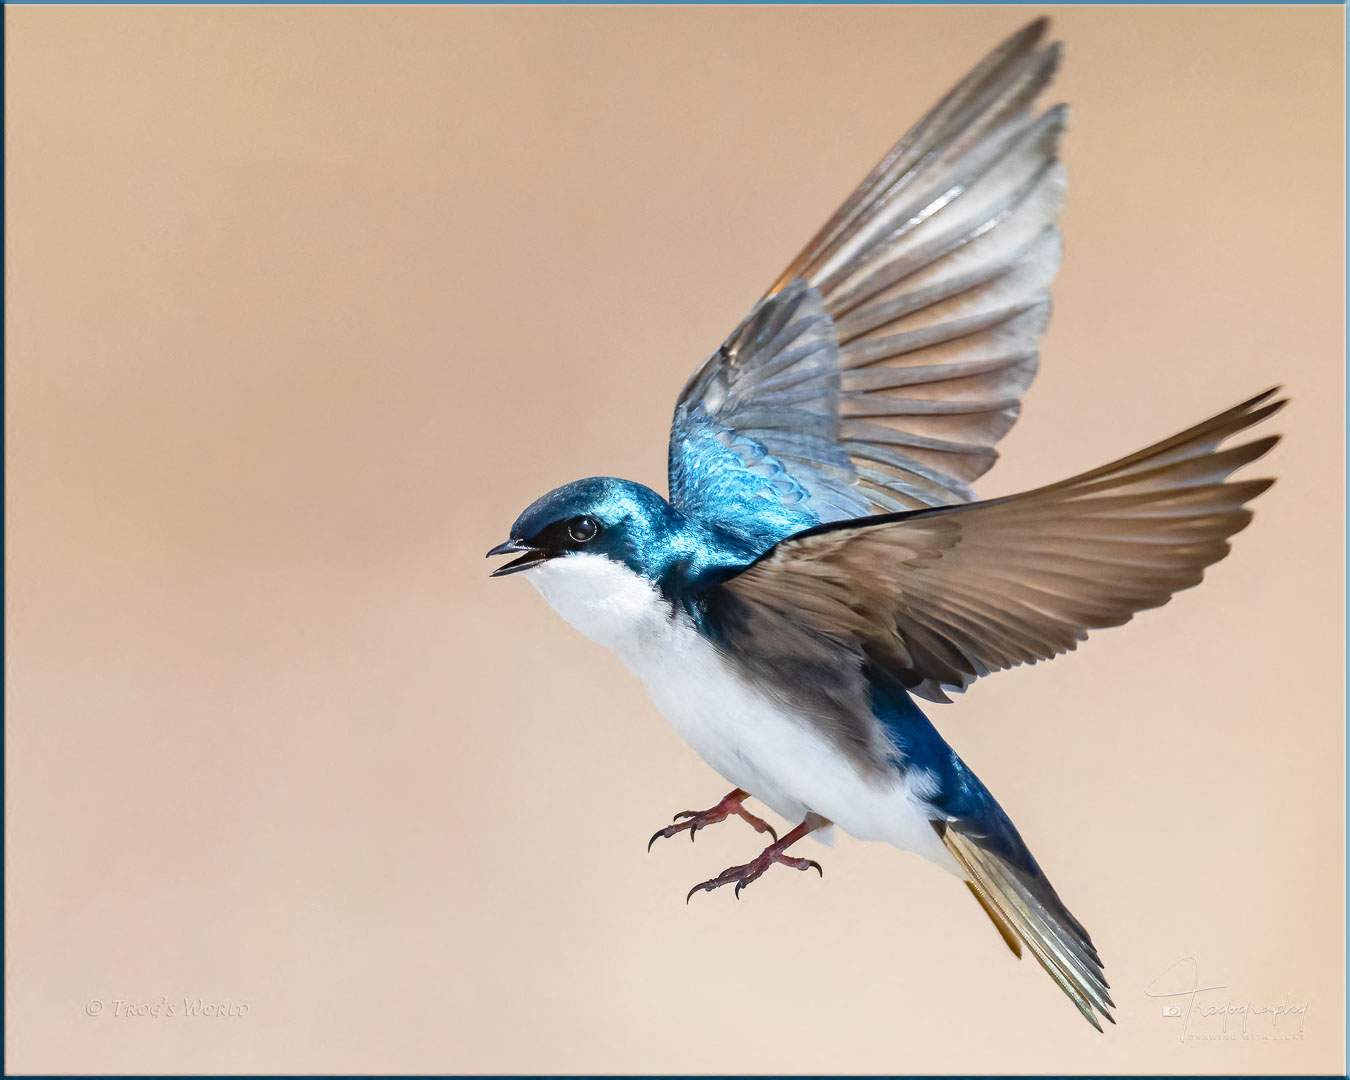 Tree Swallow captured in mid-flight